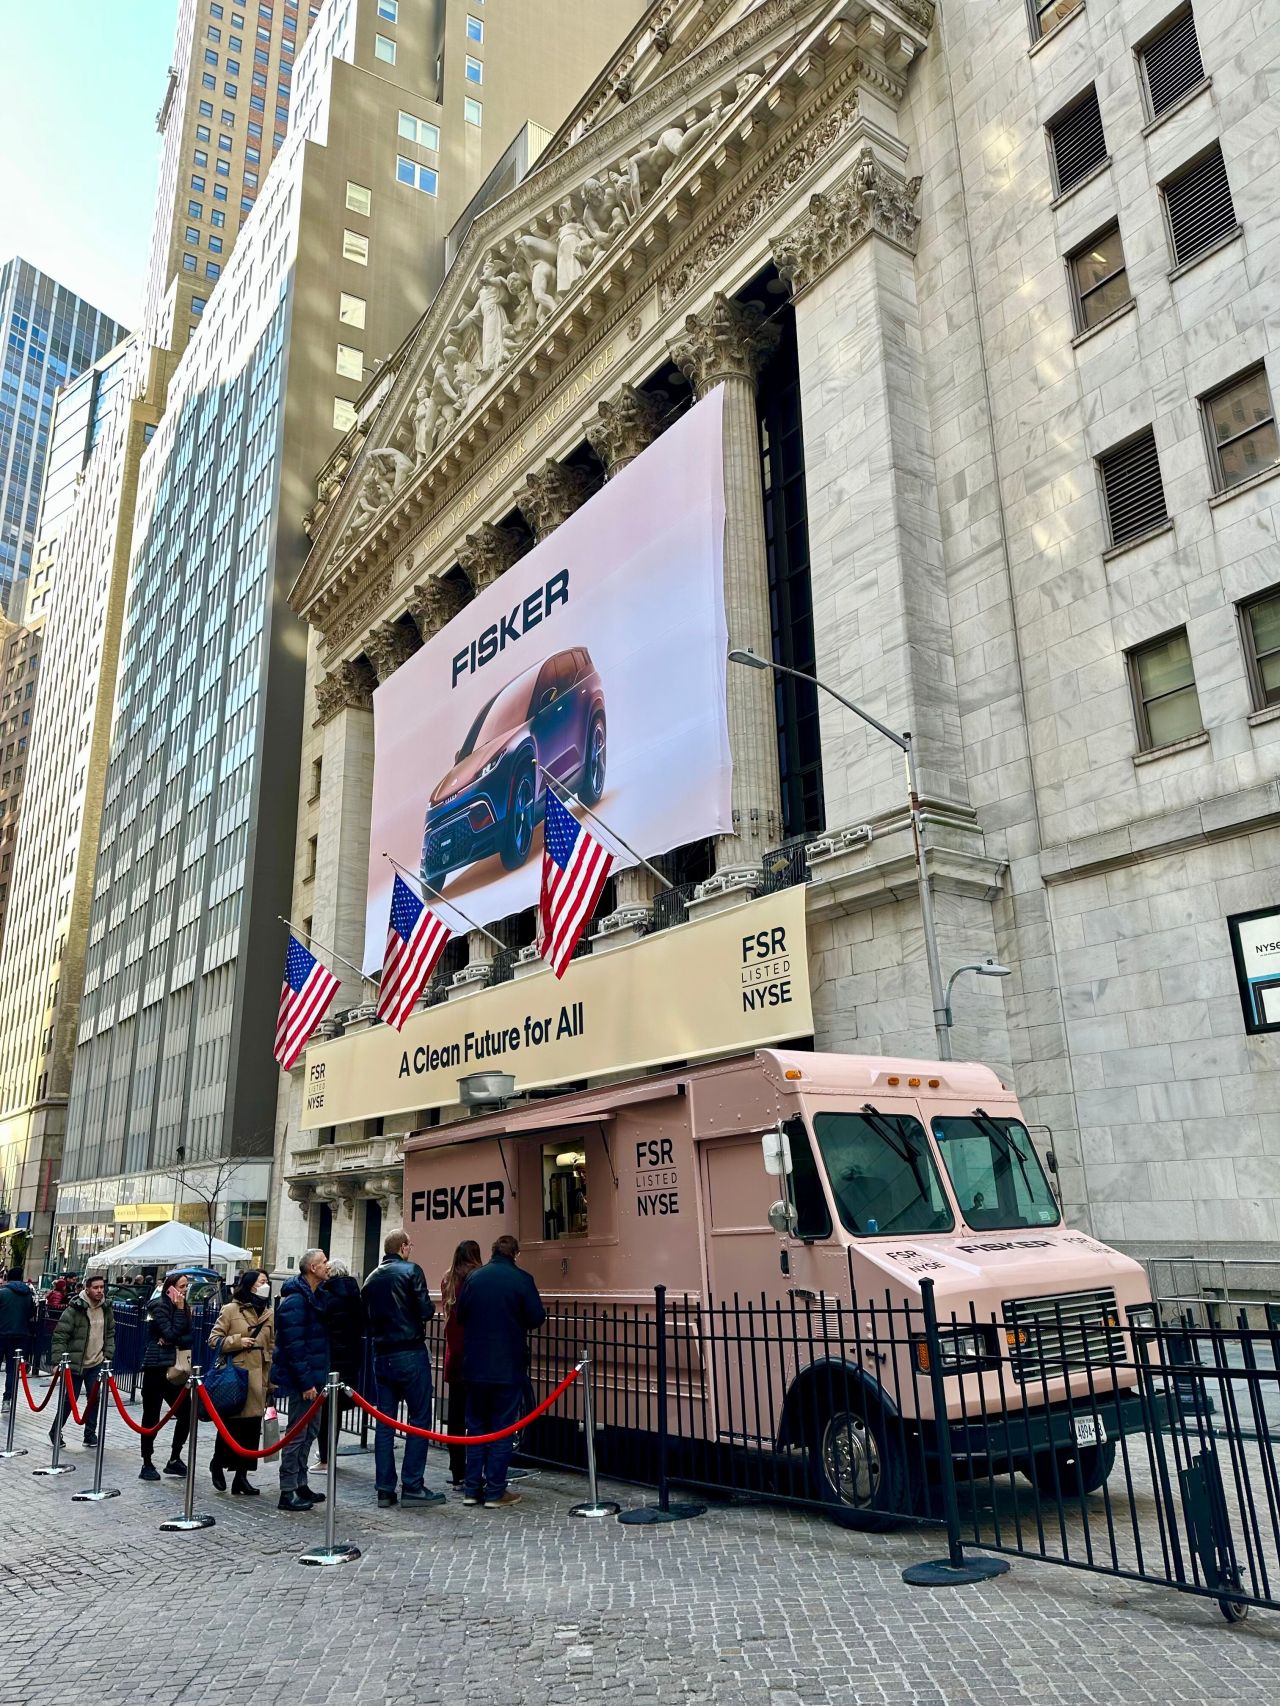 Fisker branded food truck for IPO celebration.